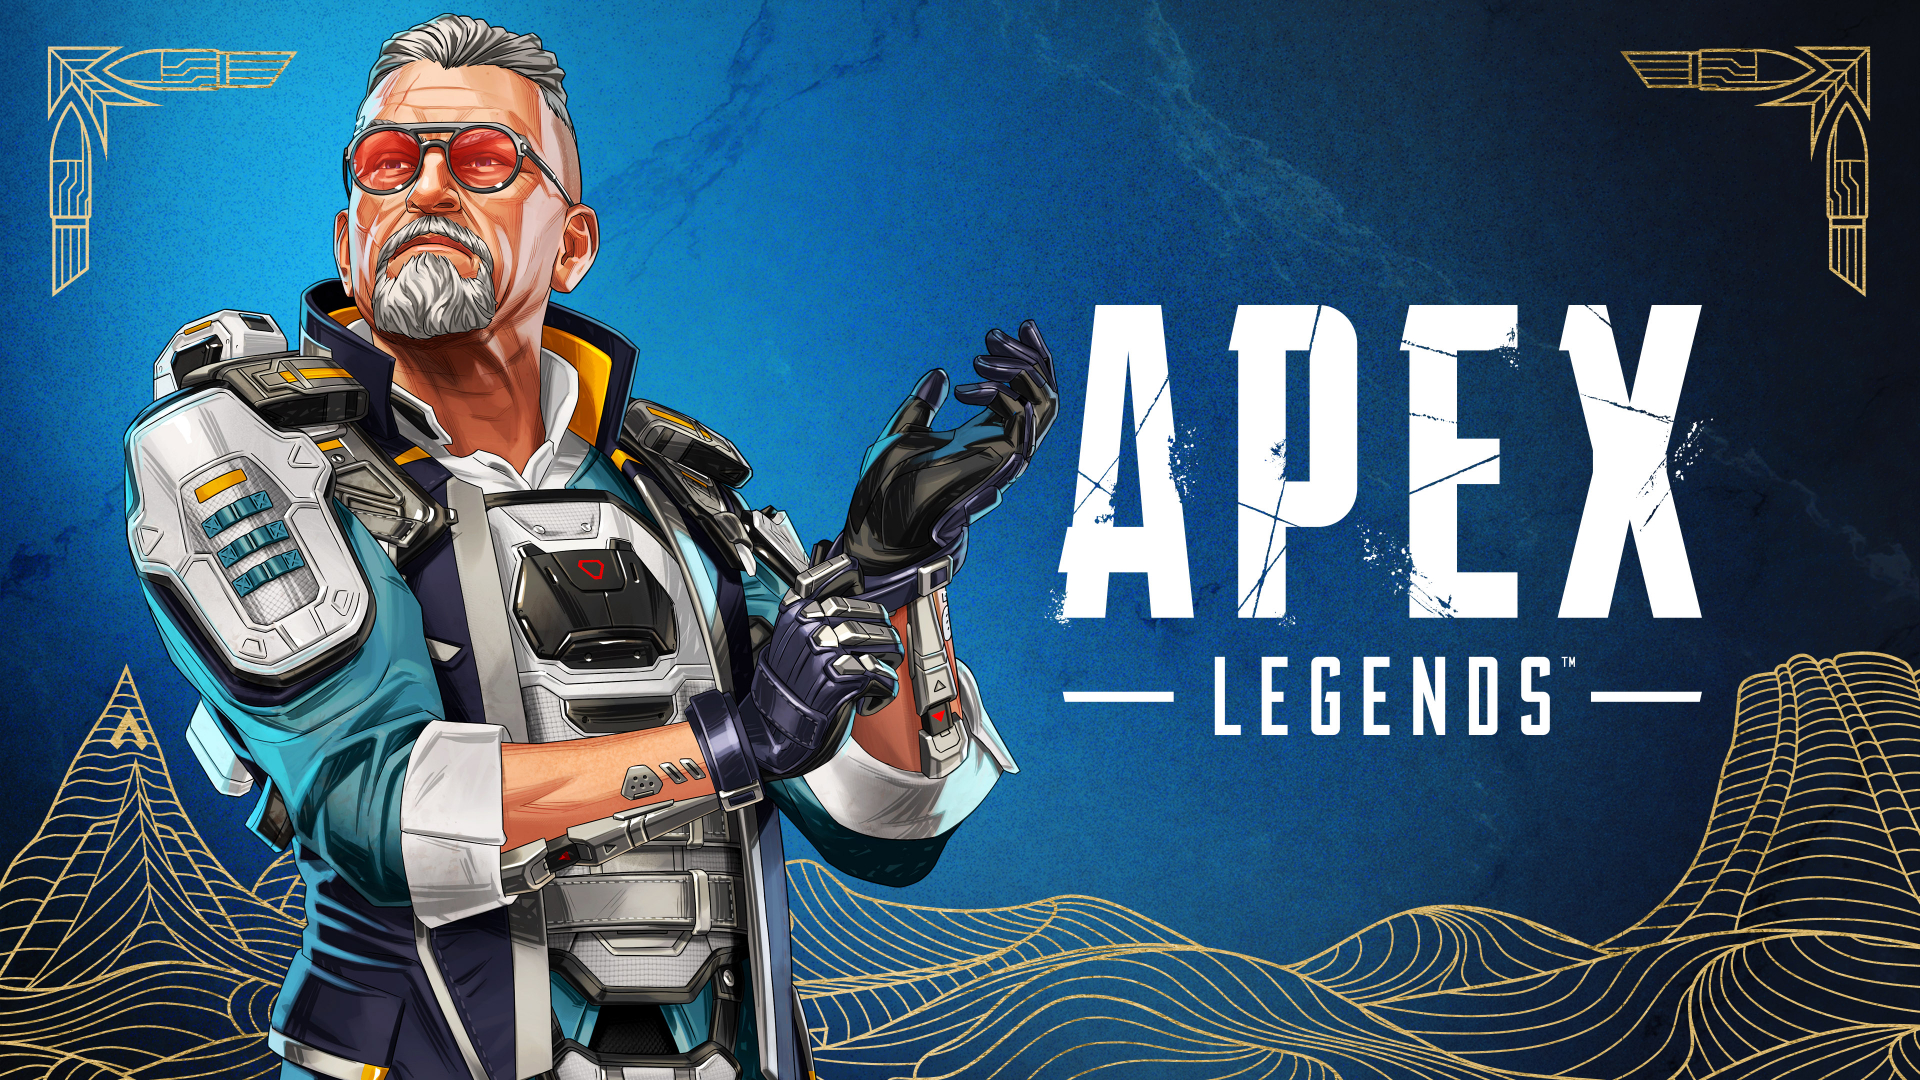 Apex Legends」、シーズン17「アーセナル」での「ランクリーグ」の仕様を公開。スプリット制が廃止に - GAME Watch